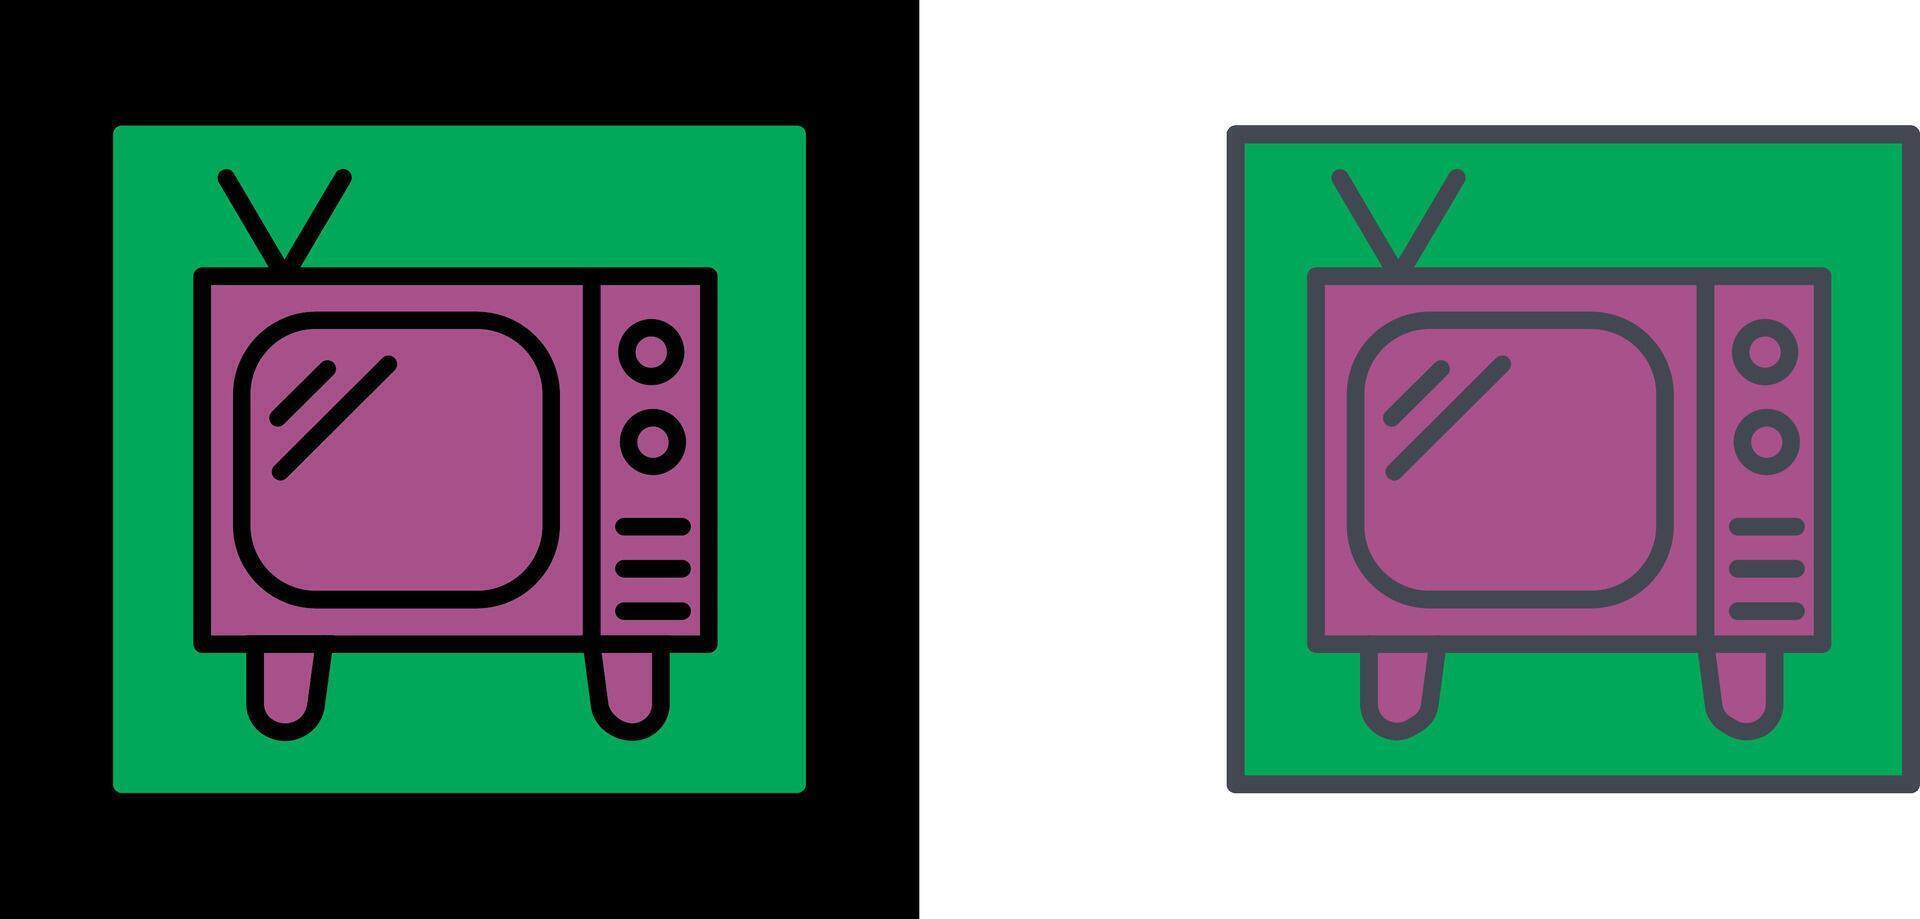 TV-Icon-Design vektor